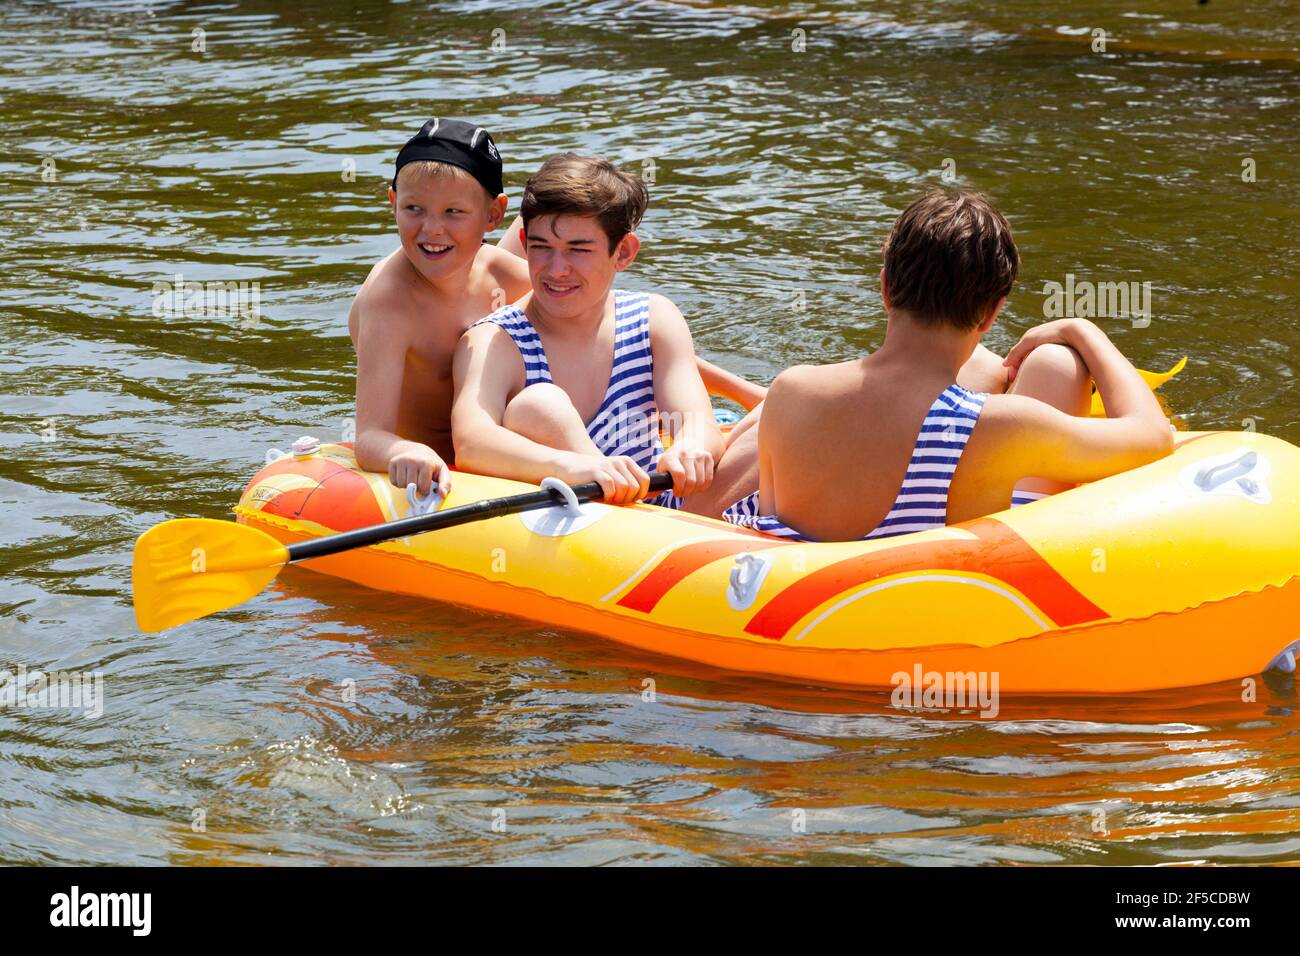 Three kids in inflatable boat, children enjoying summer adventures on water Stock Photo